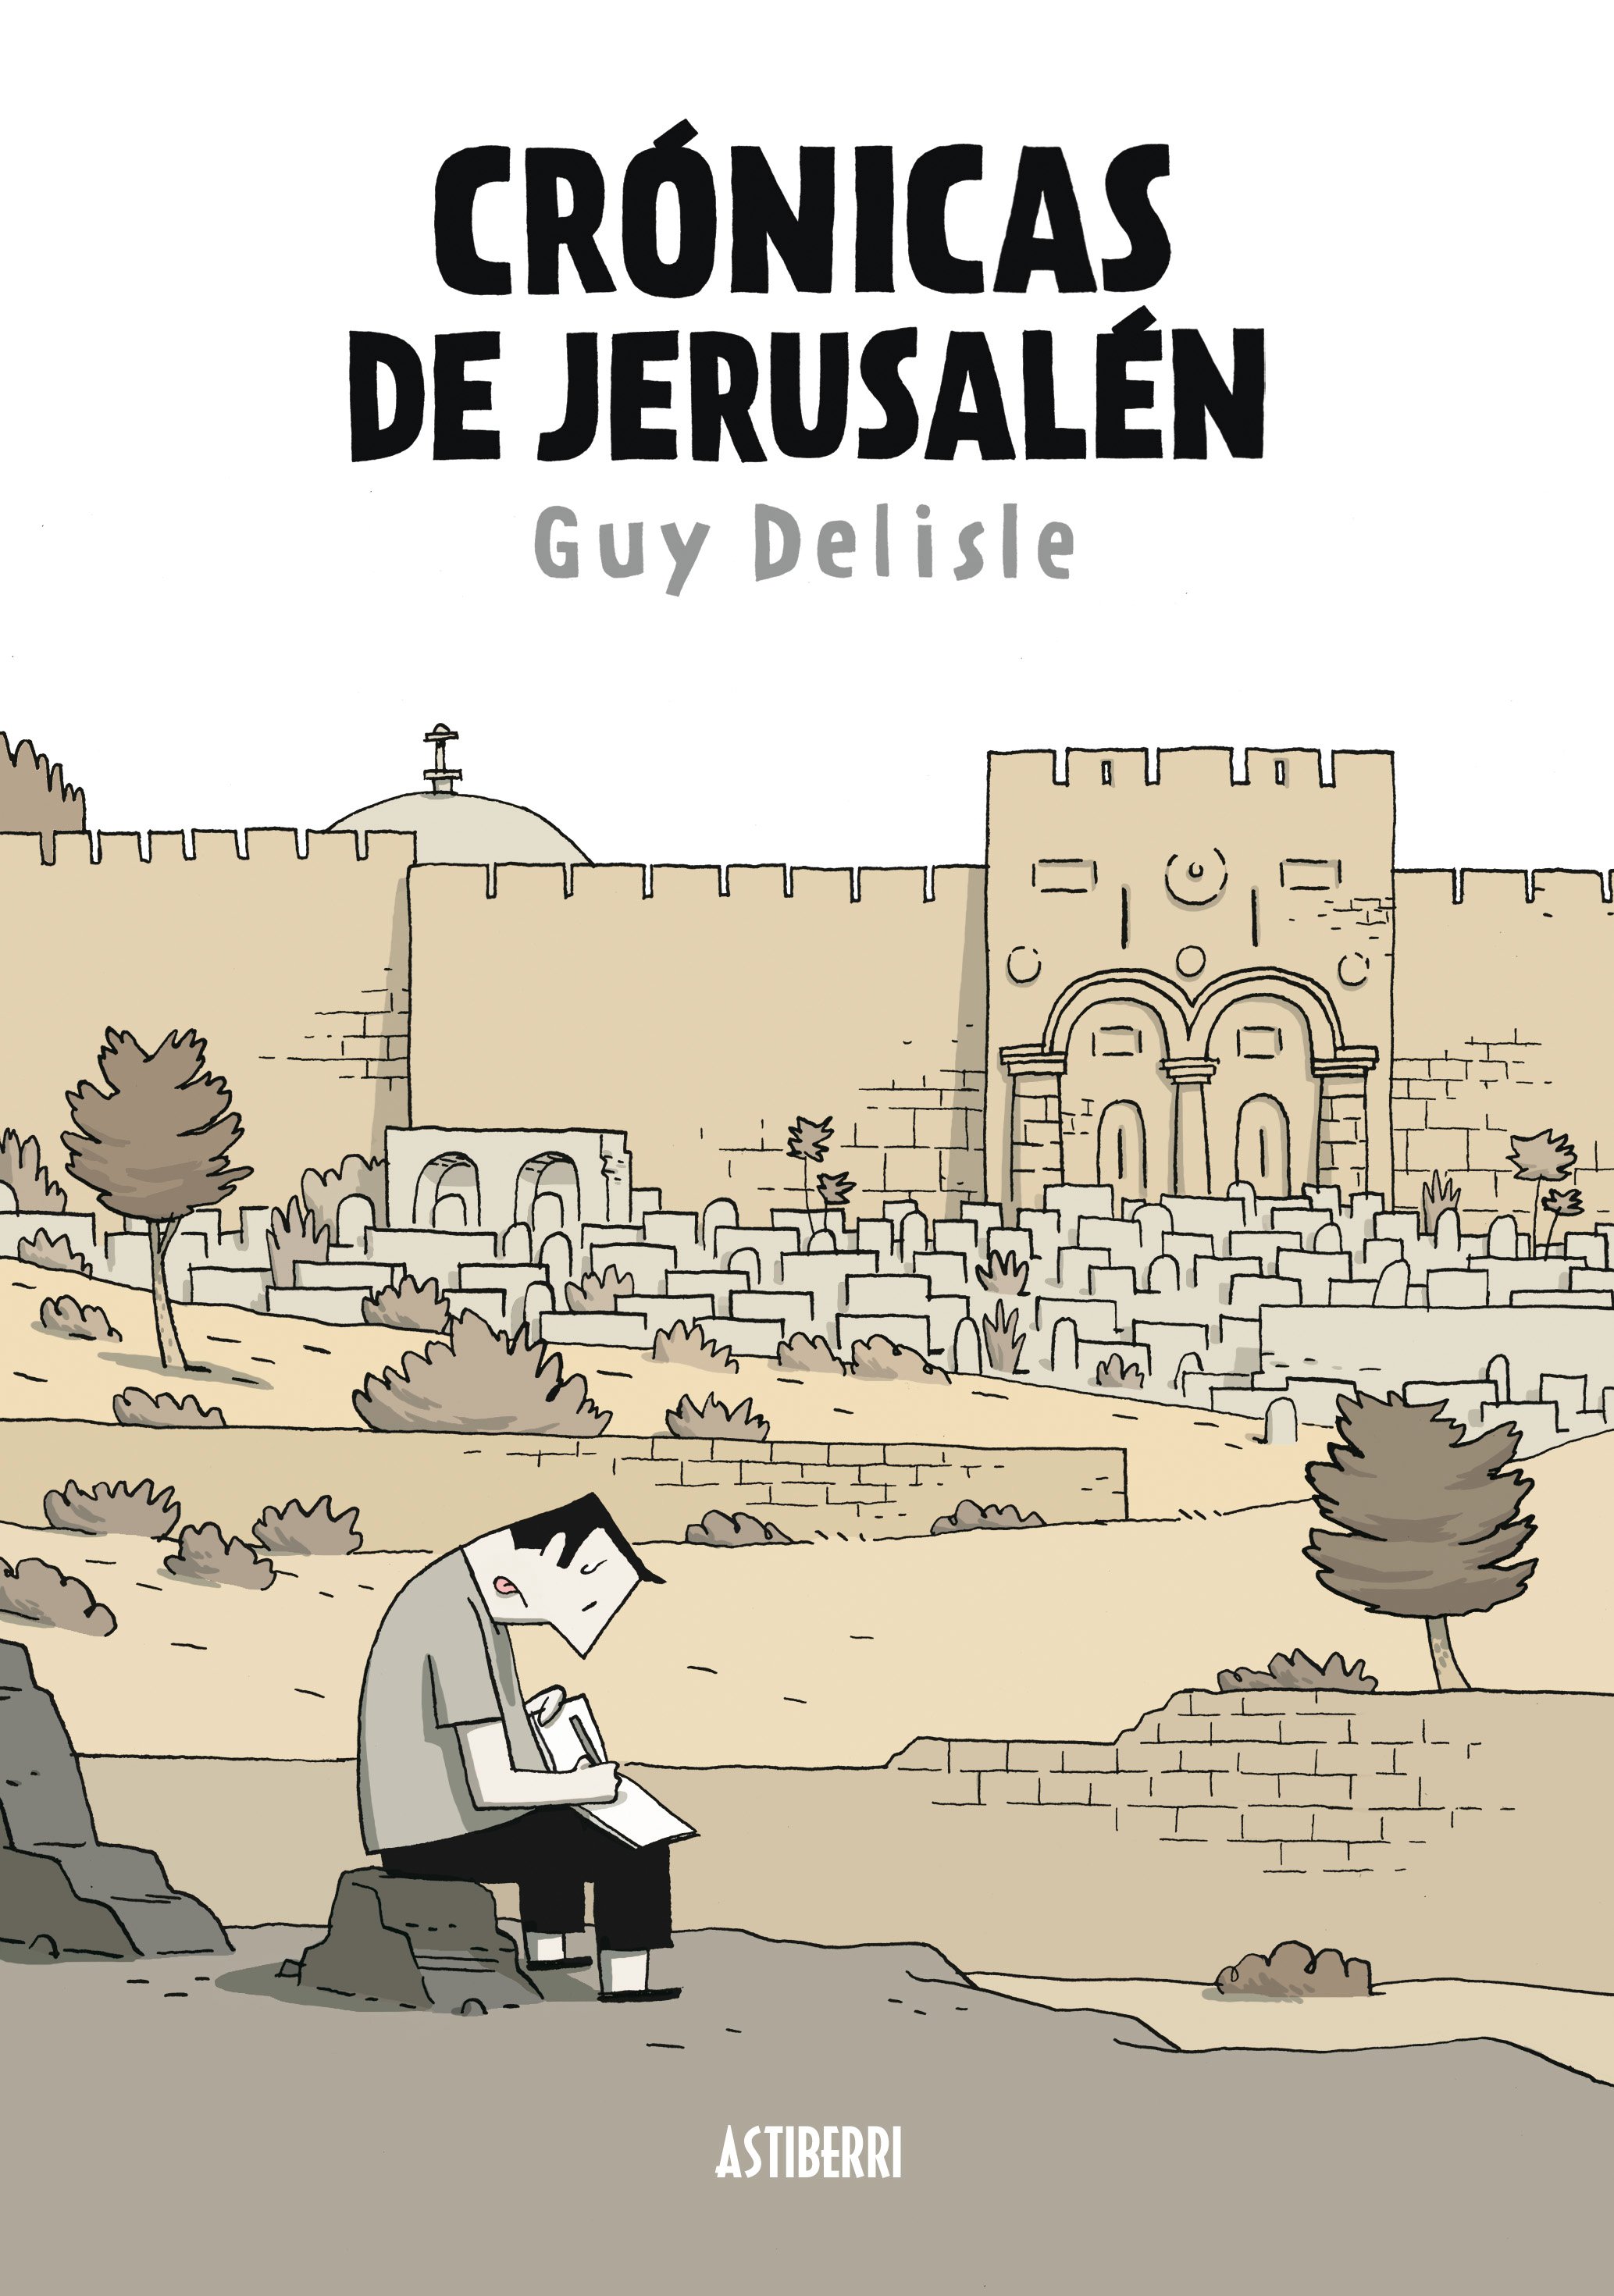 Guy Delisle: Crónicas de Jerusalén (Hardcover, Gaztelania language, Astiberri)